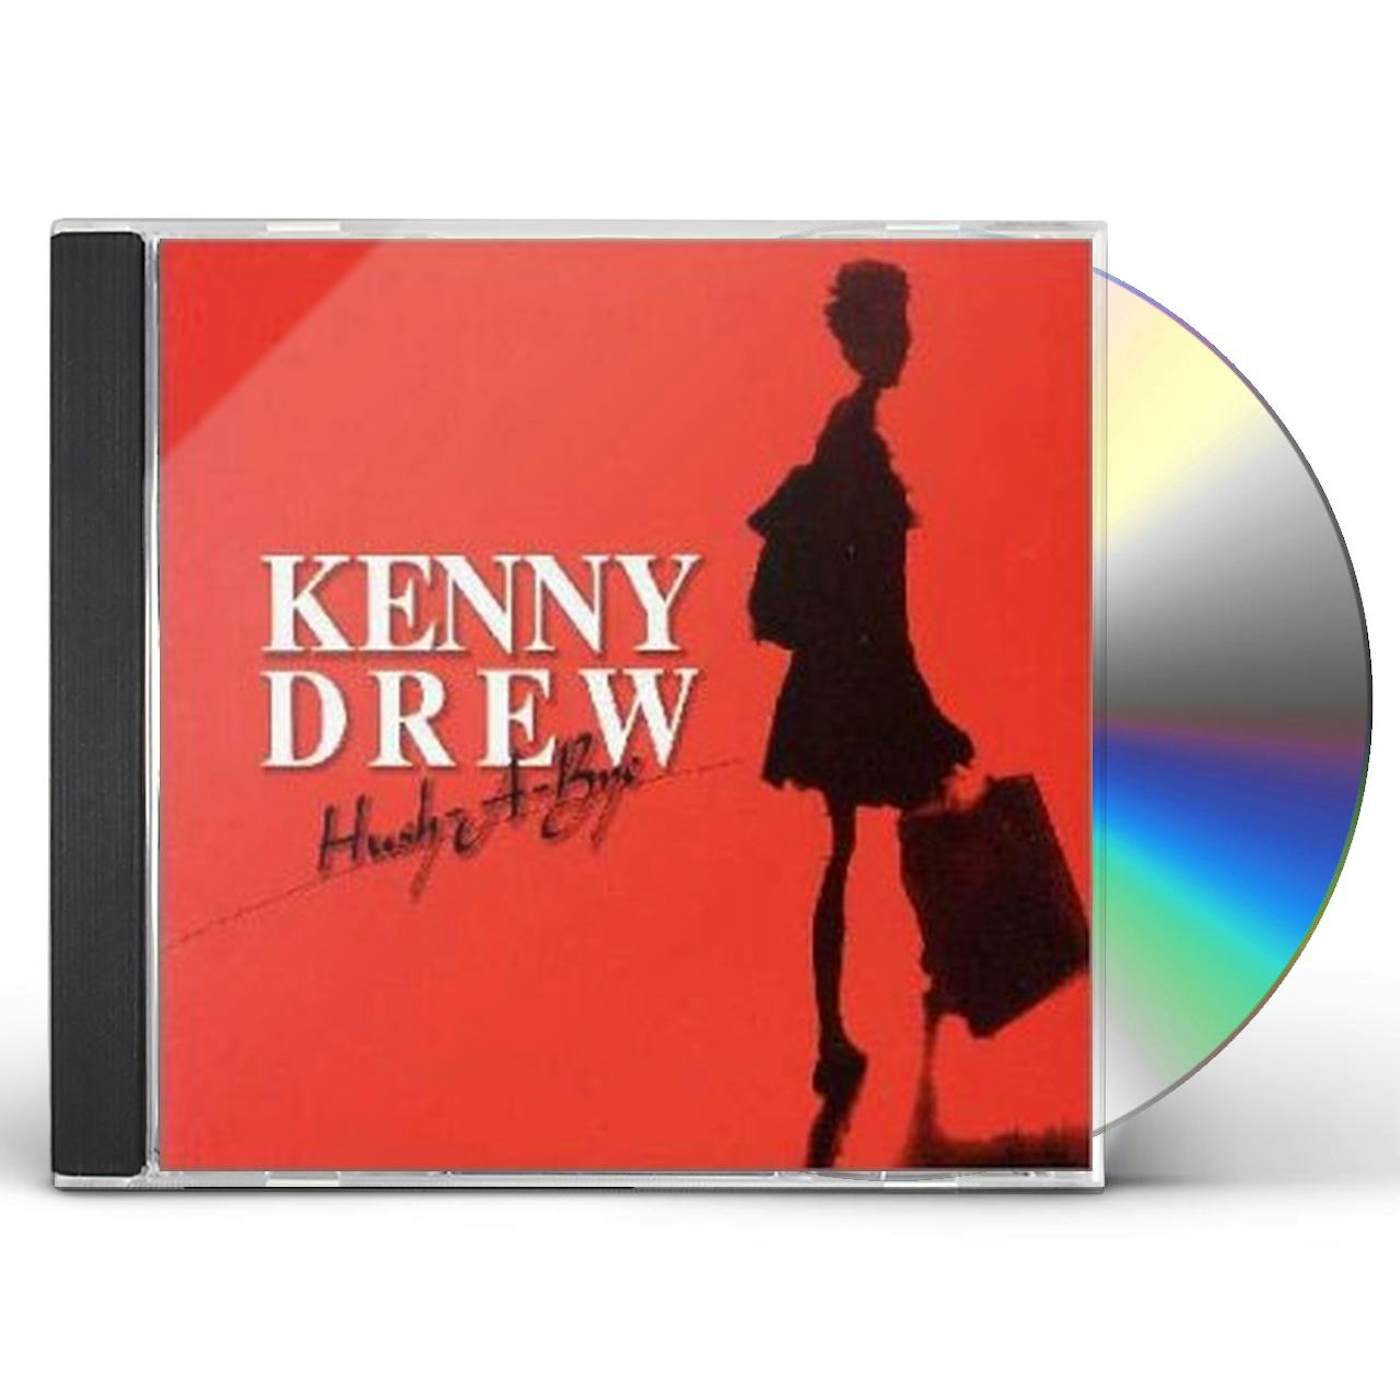 Kenny Drew HUSH-A-BYE CD